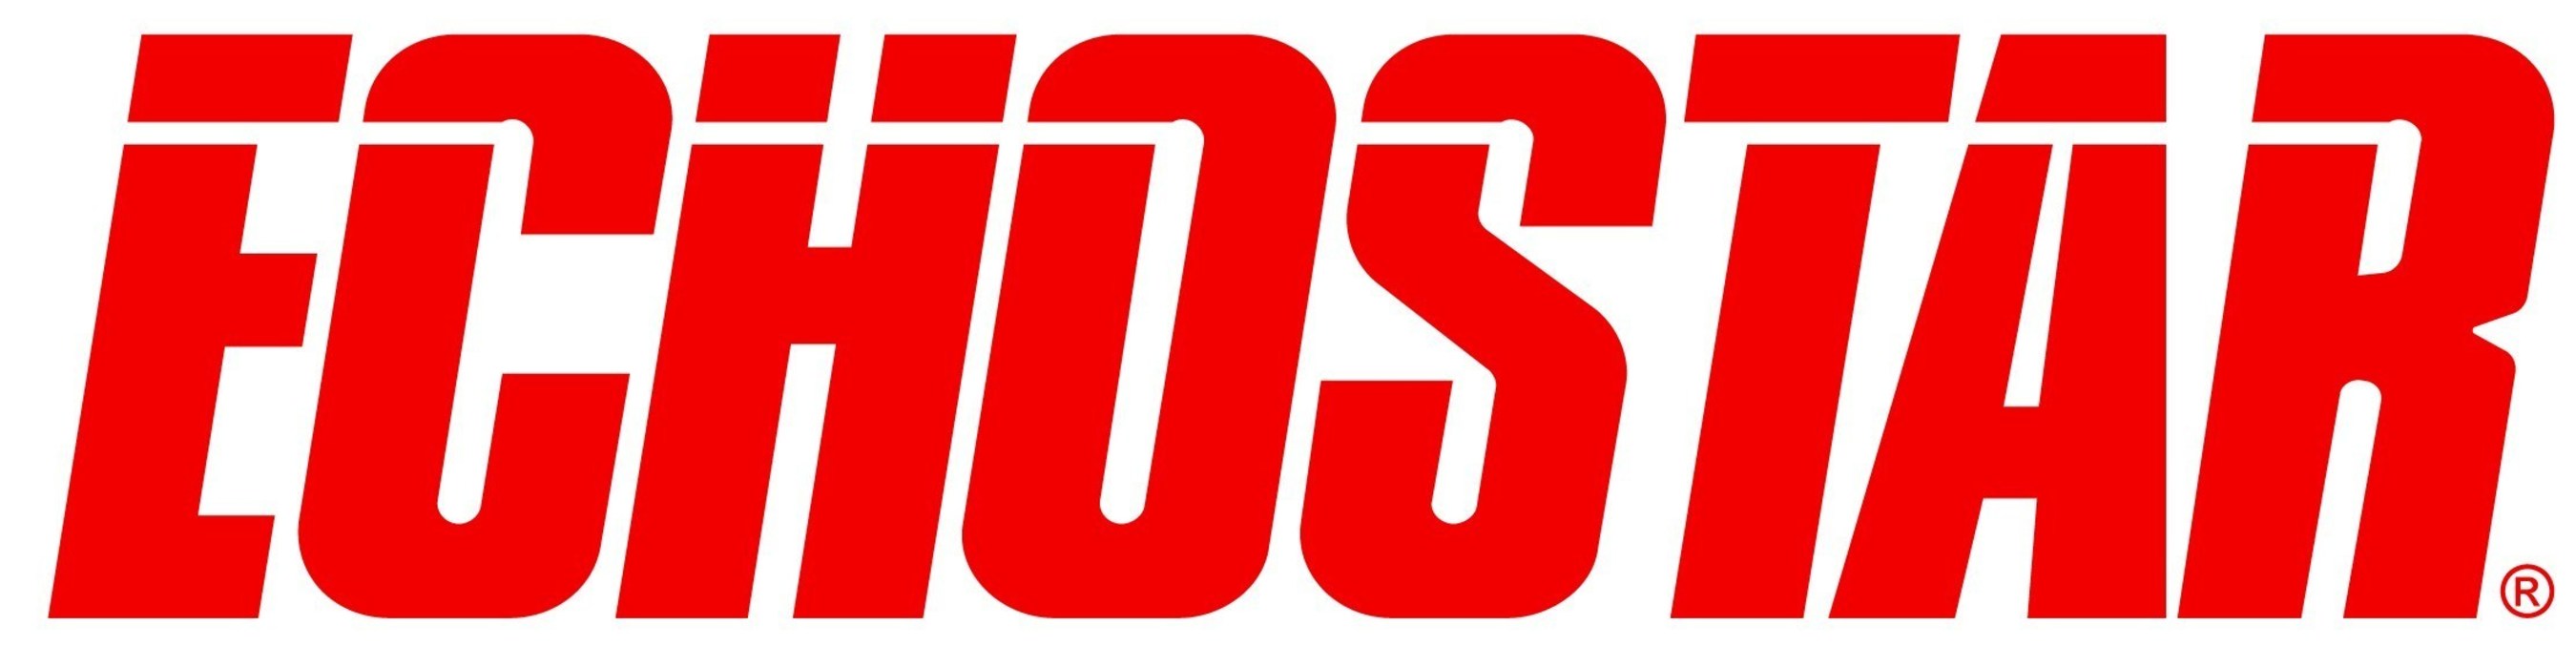 EchoStar Corporation Logo